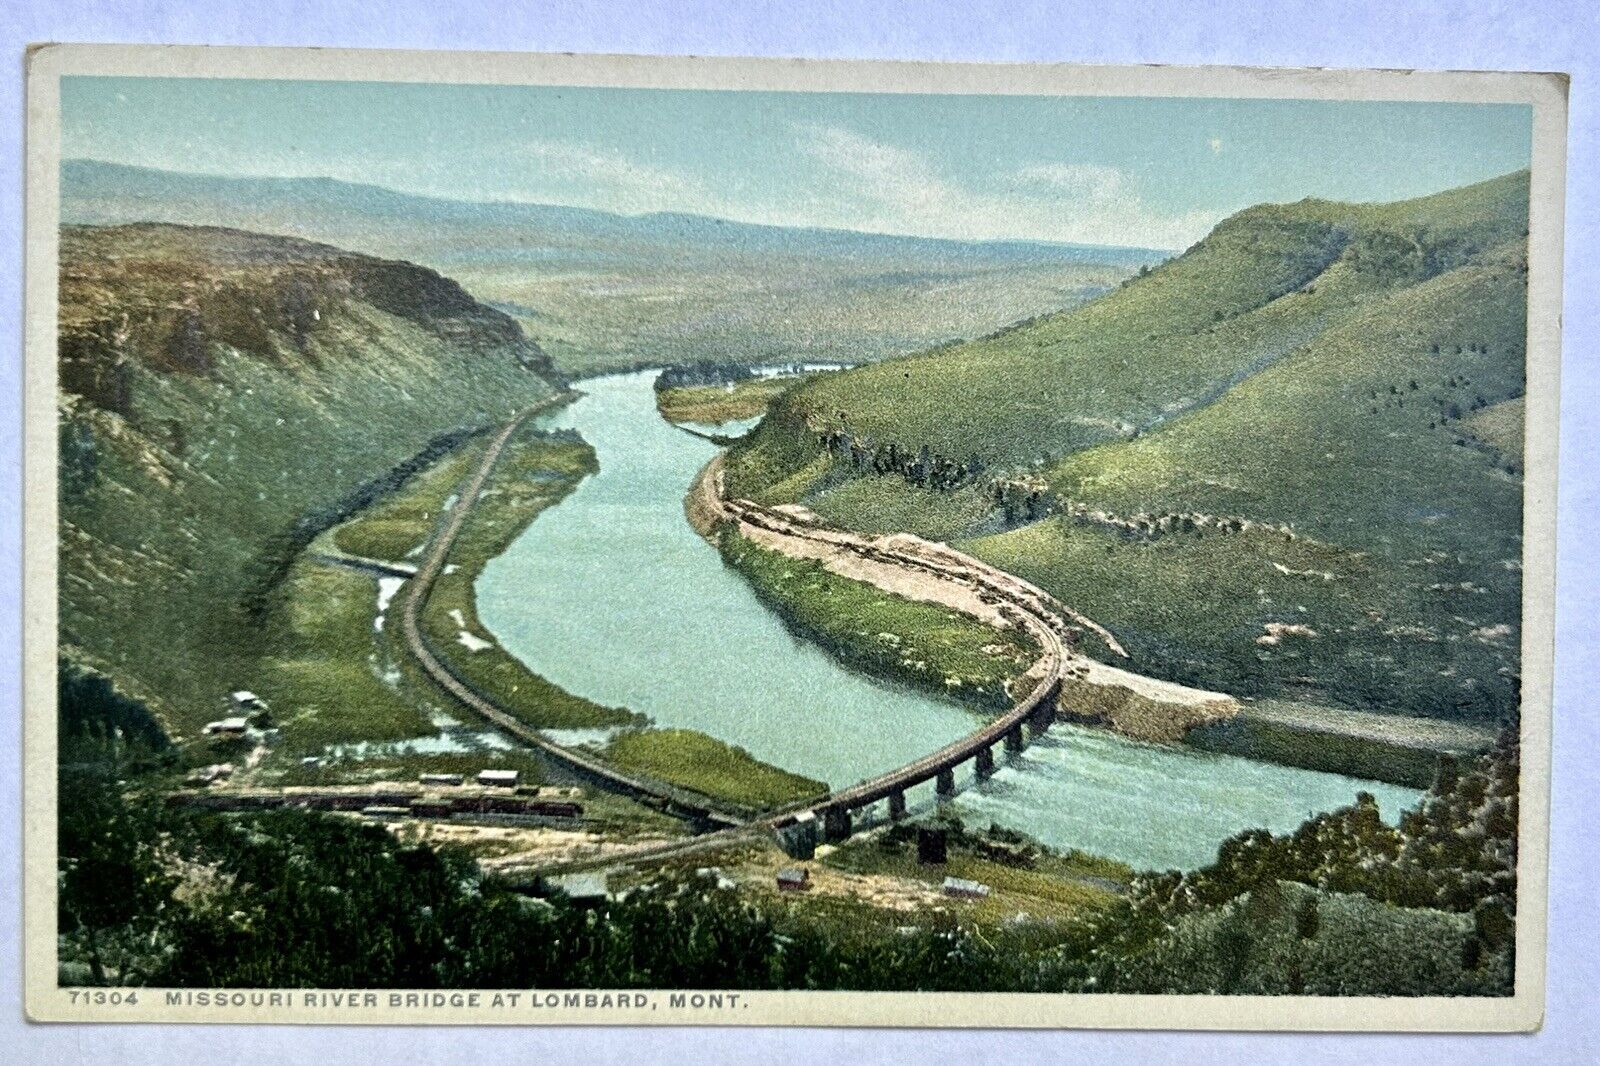 MISSOURI RIVER BRIDGE AT LOMBARD. Montana. MT. Vintage Postcard